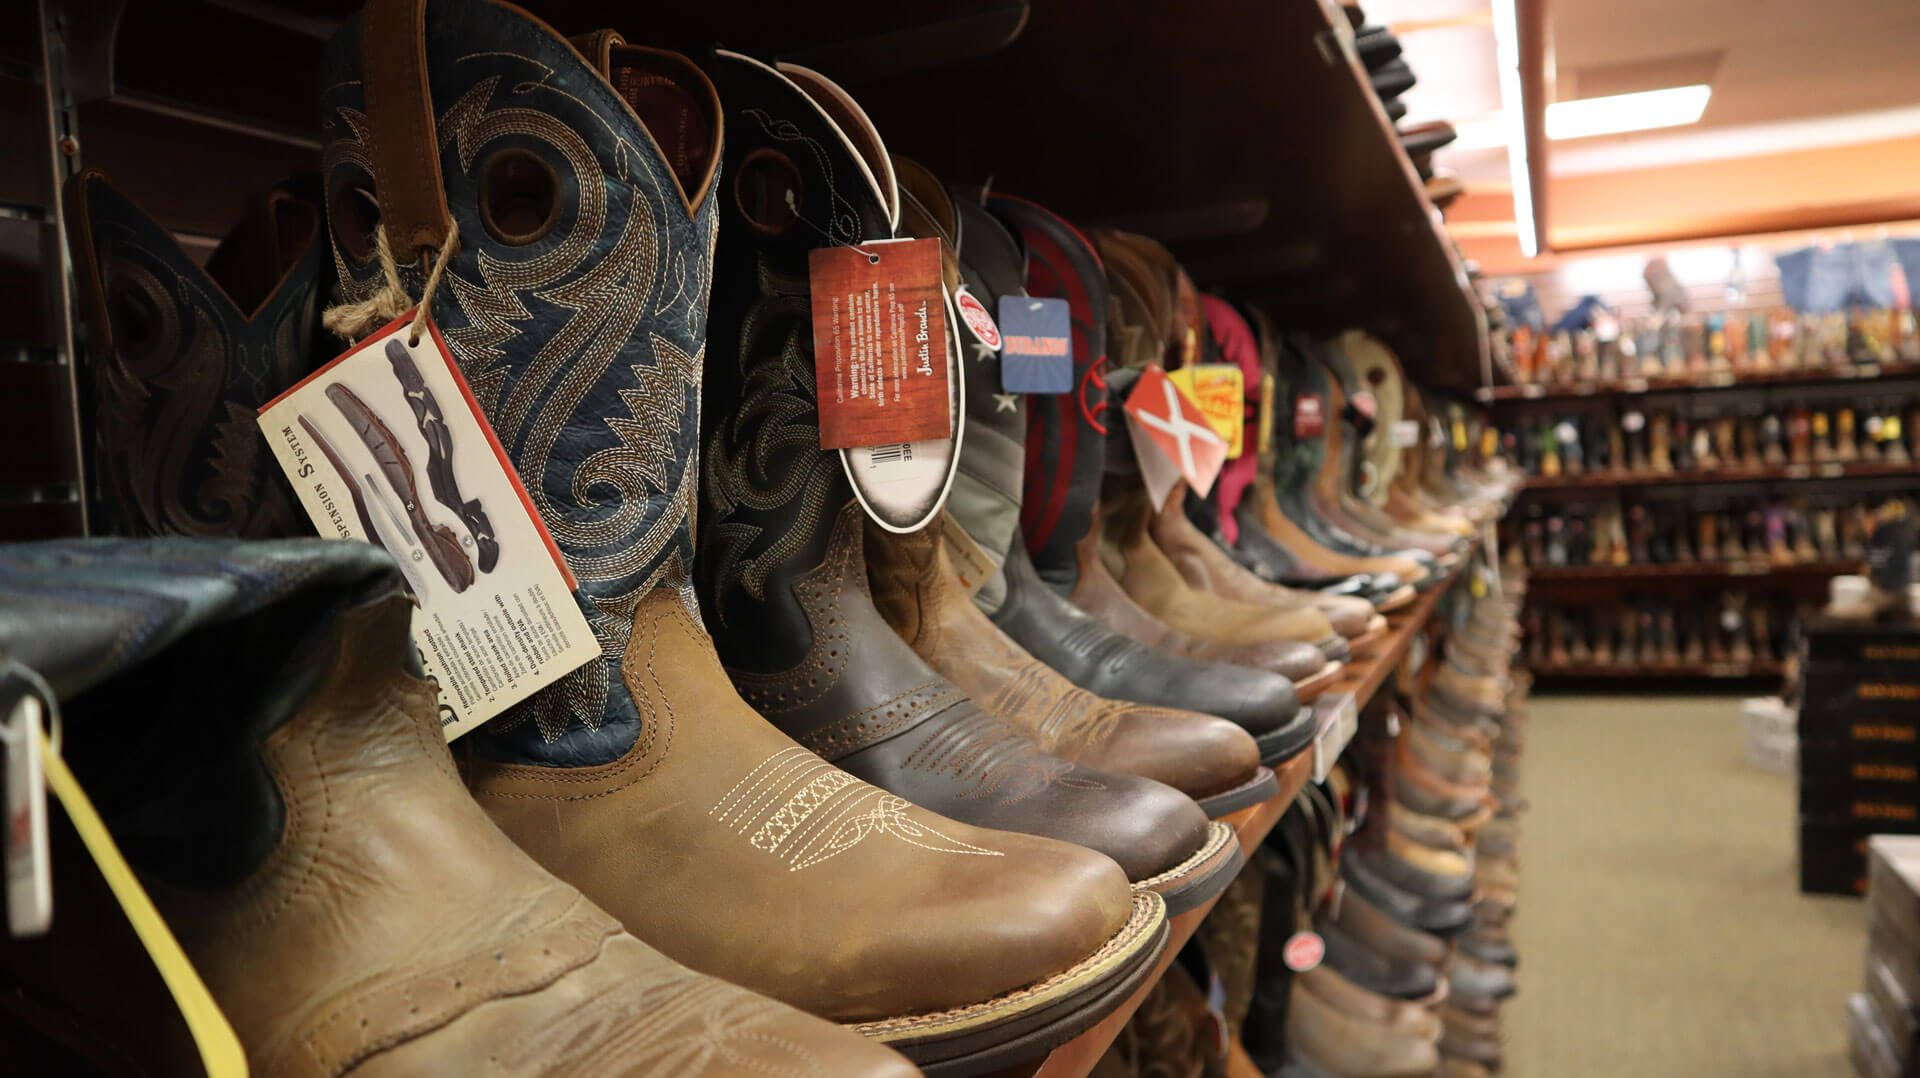 discount cowboy boots near me